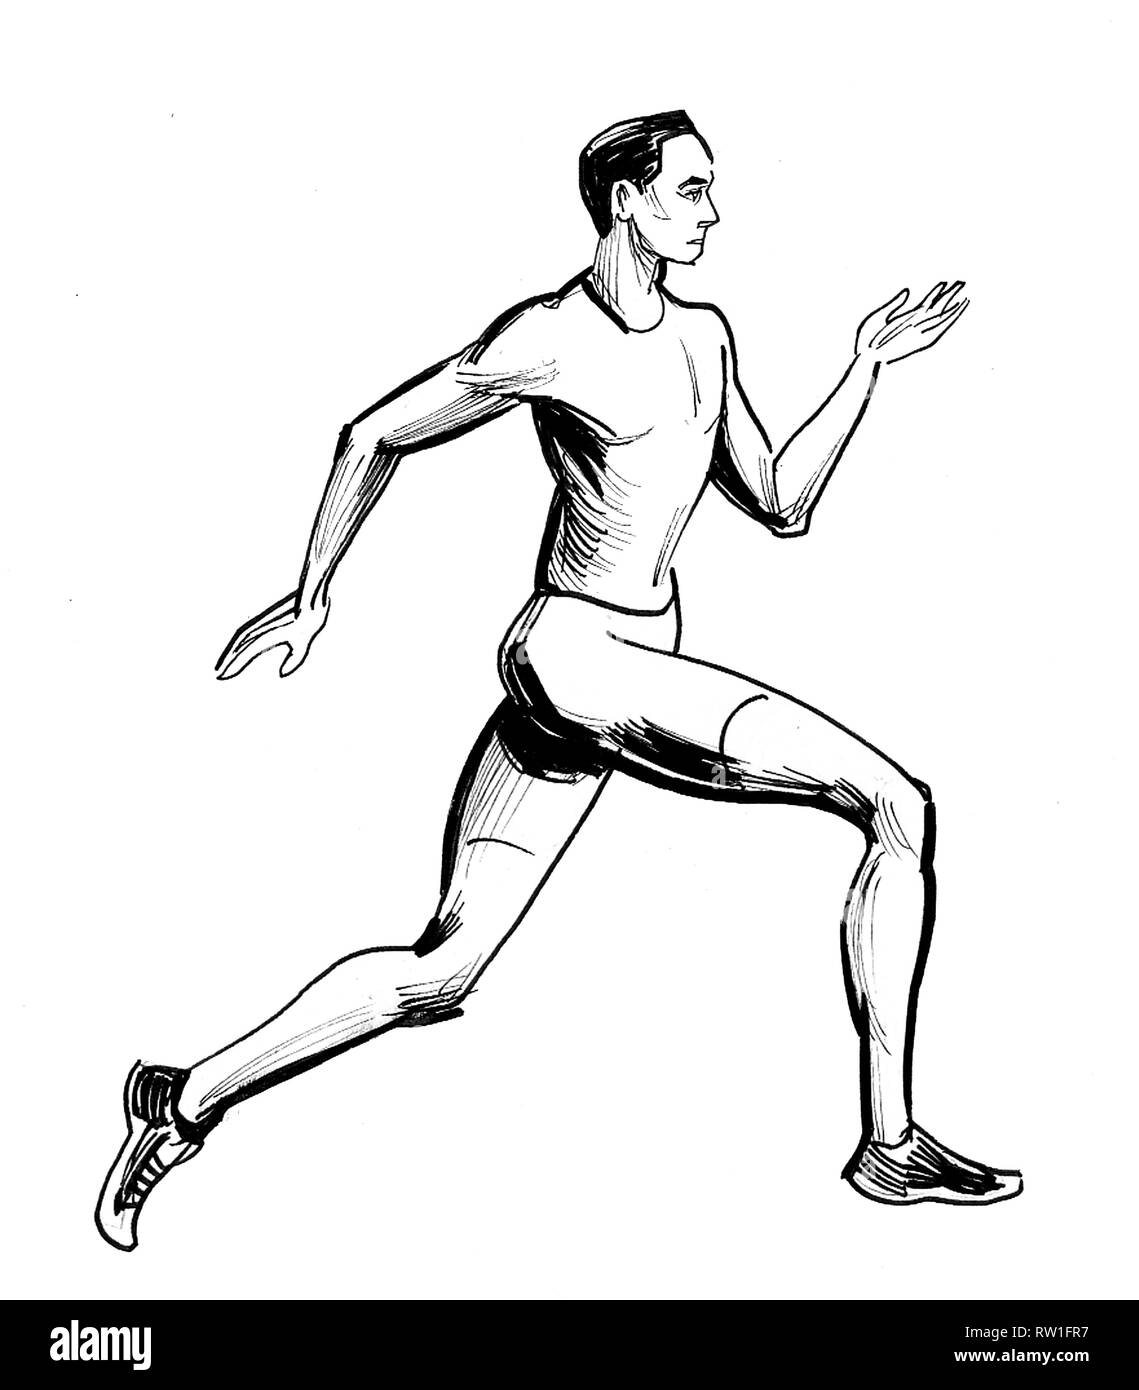 One Line Drawing Athlete Running Fast Stock Vector Royalty Free  1315096901  Shutterstock  Line drawing Running art Running illustration